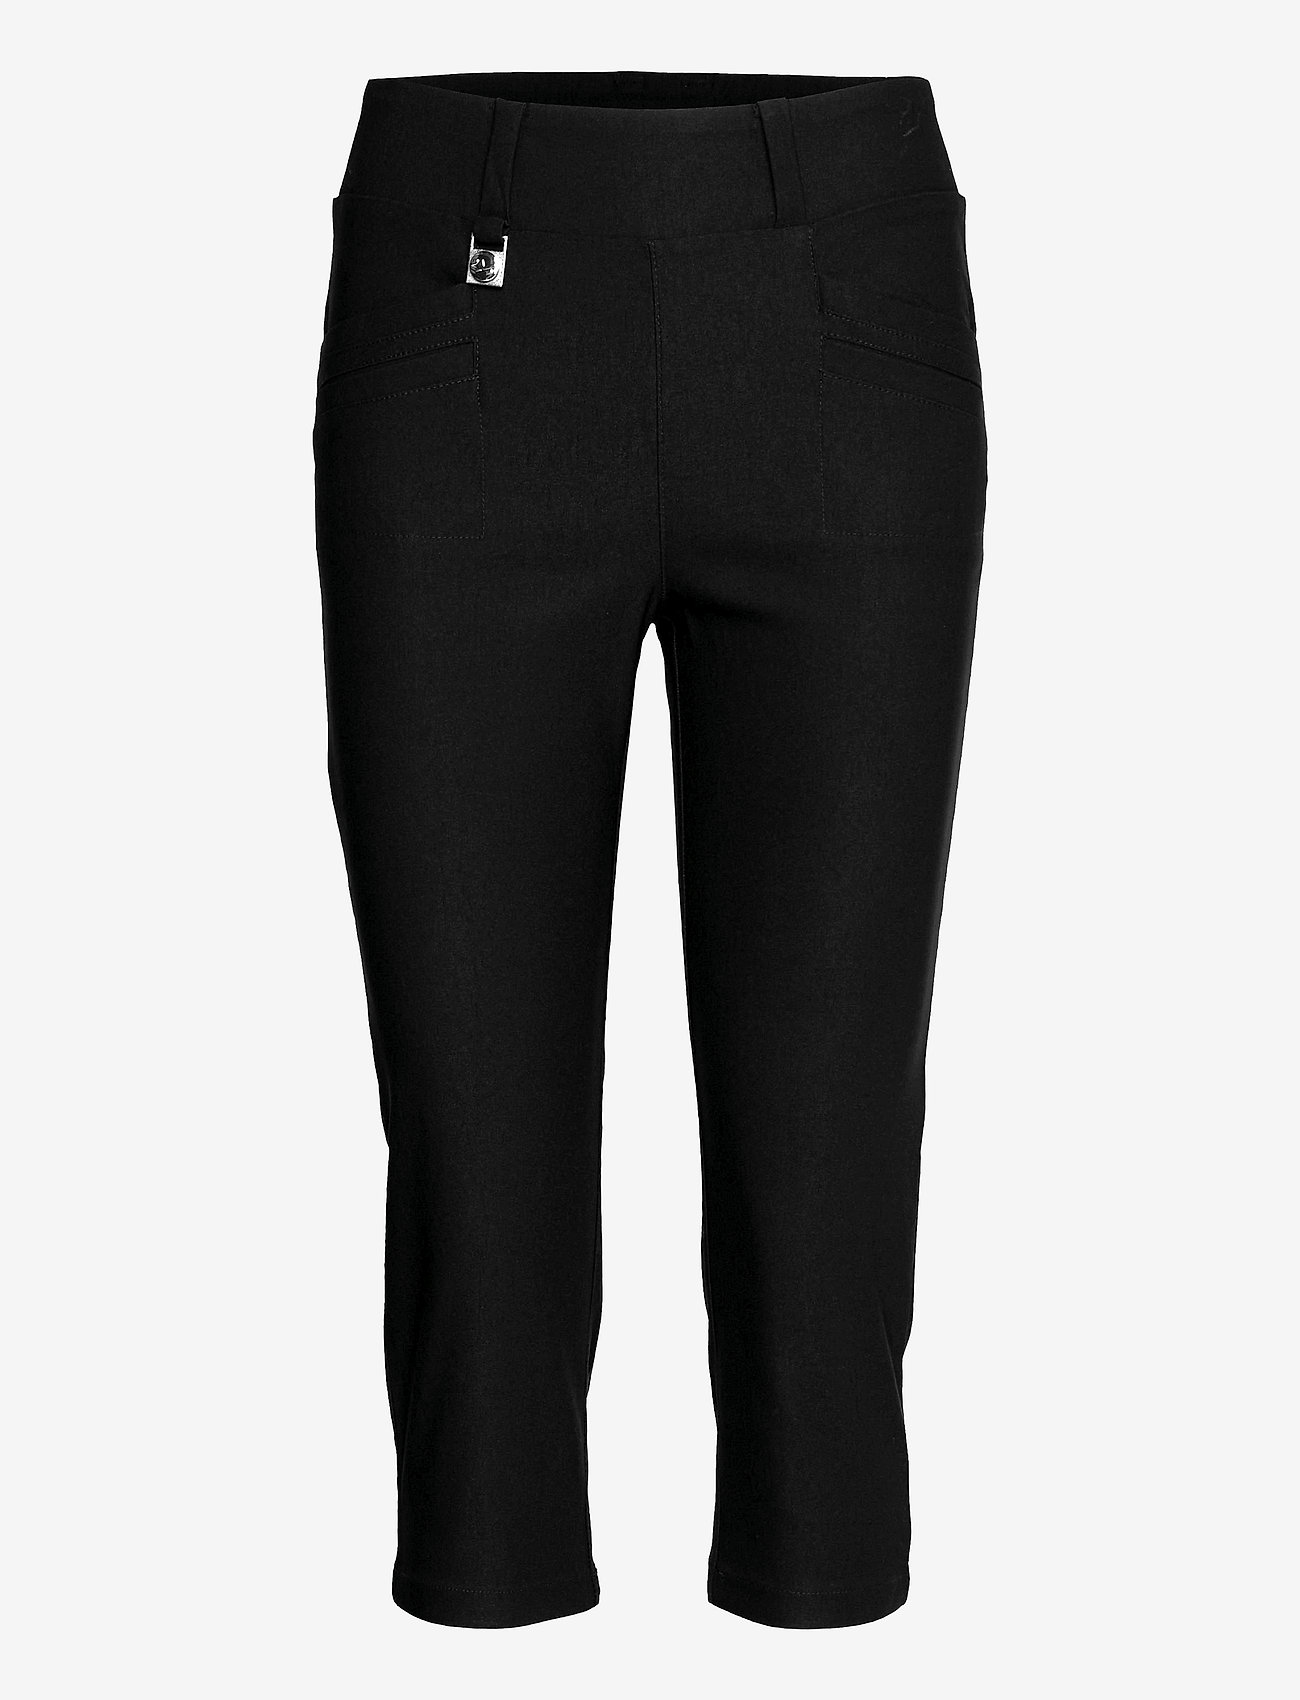 Röhnisch - Embrace capri - golf pants - black - 1